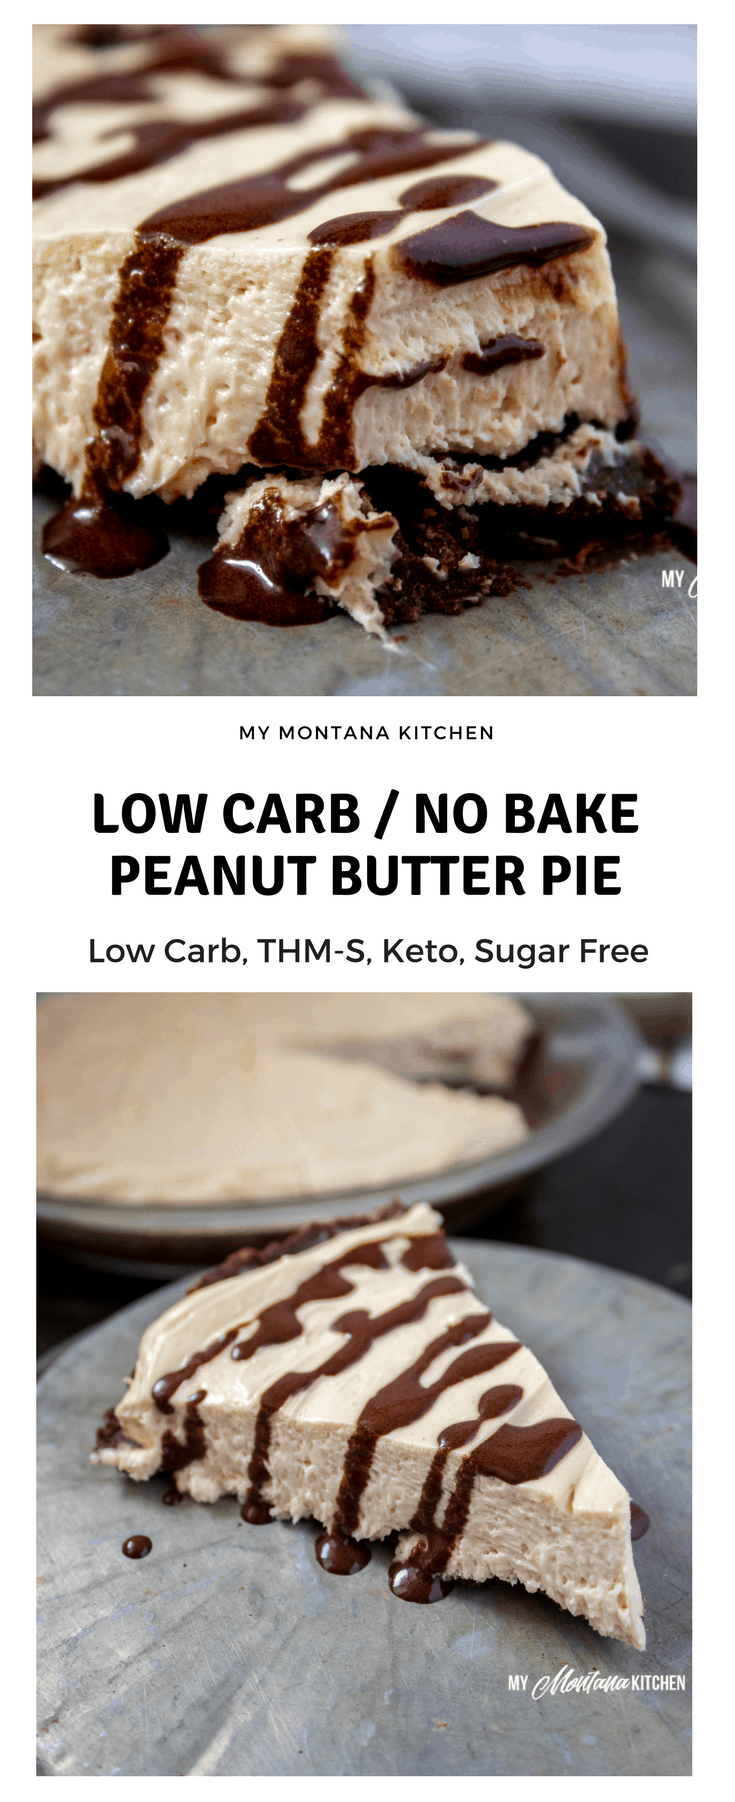 No Bake Low Carb Peanut Butter Pie (THM-S, Keto, Sugar Free, Gluten Free) #trimhealthymama #thm #lowcarb #keto #sugarfree #peanutbutter #chocolate #pie #peanutbutterpie